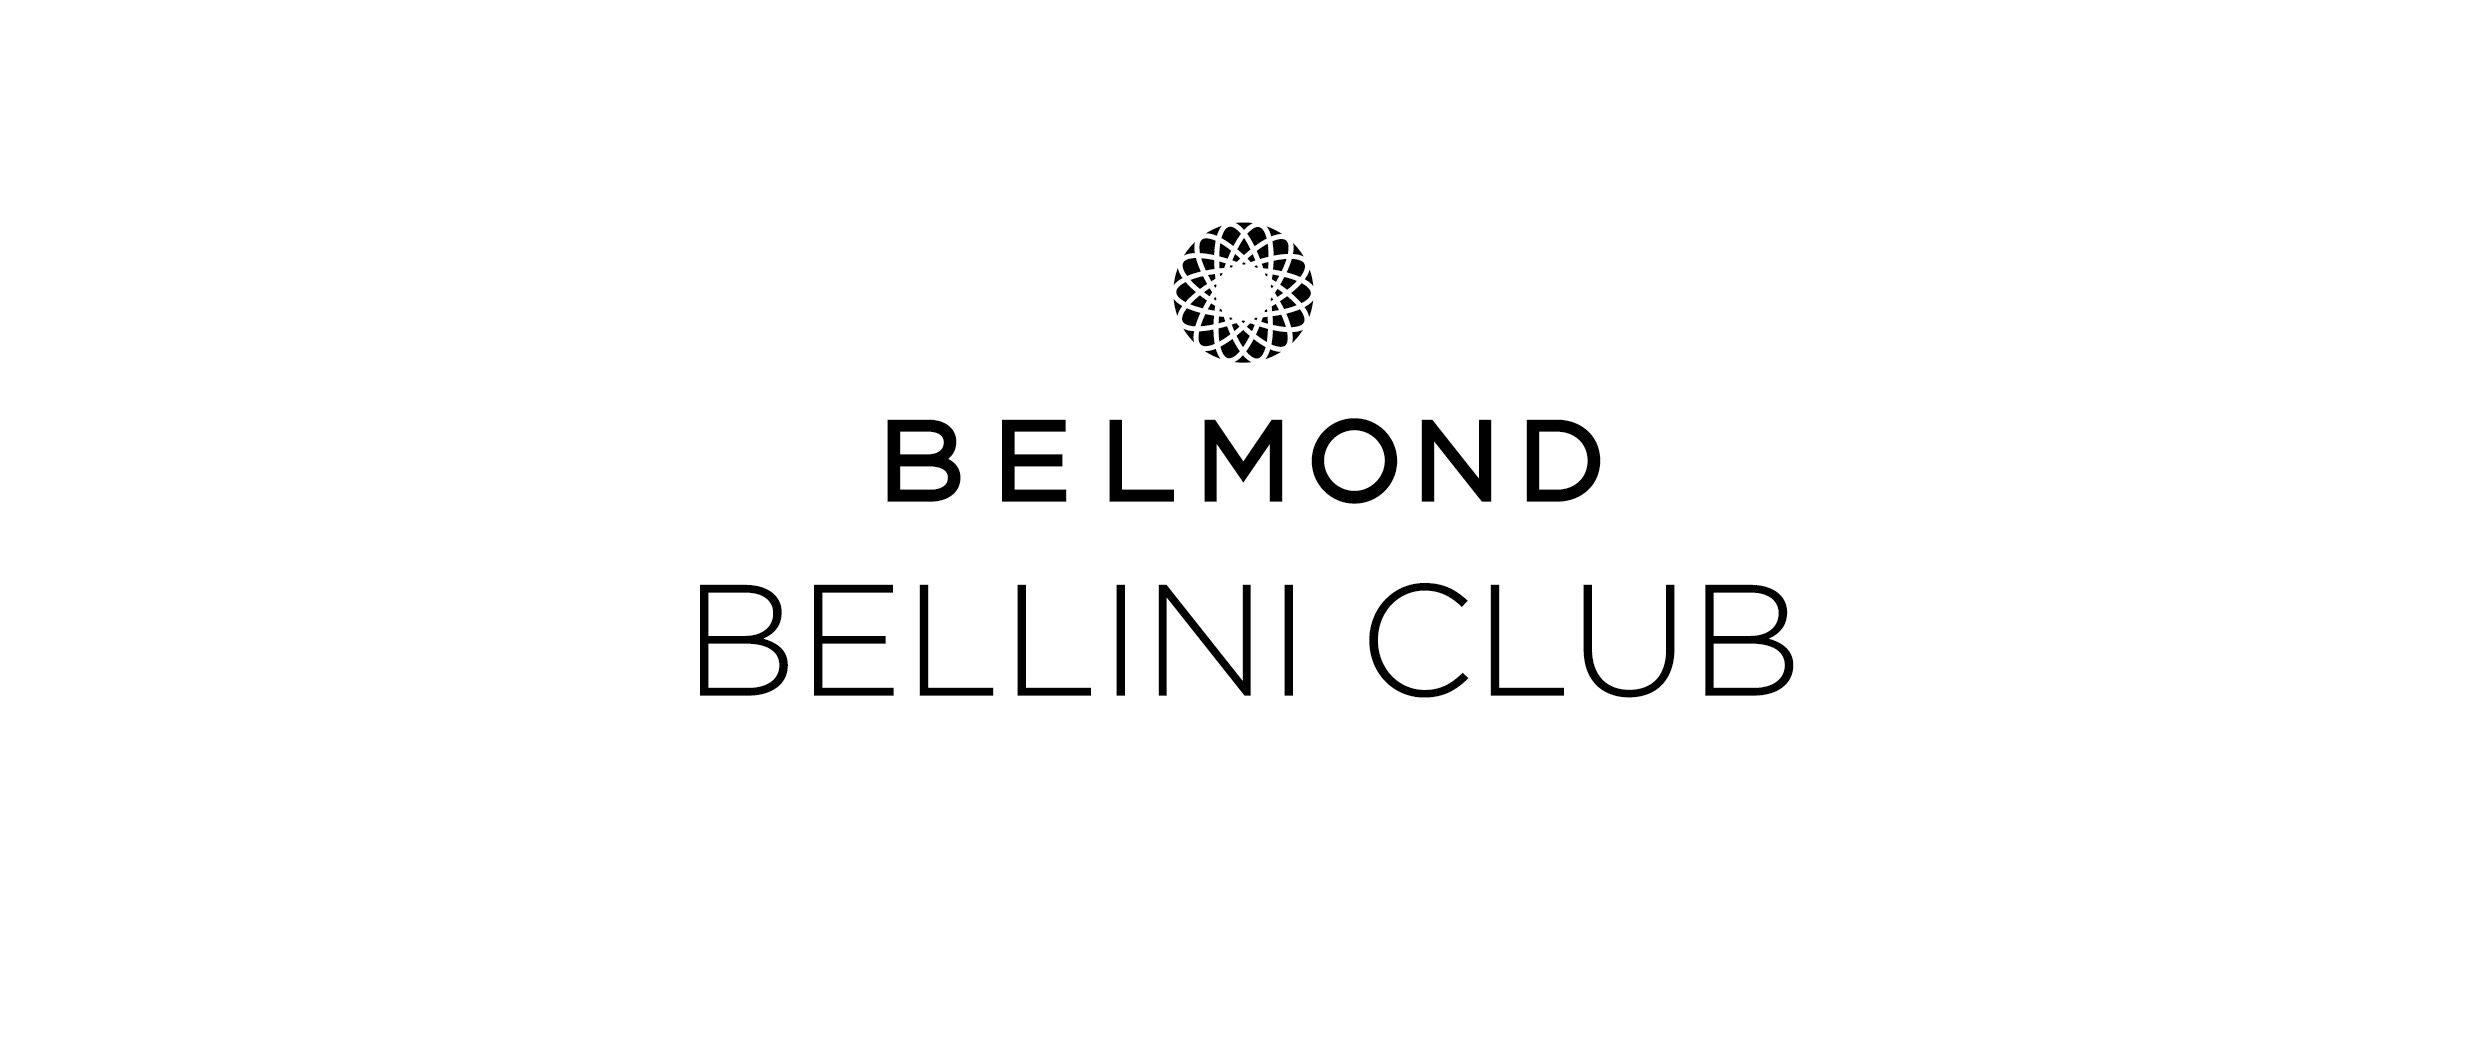 Belmond Bellini Club Benefits Guide - by Randy Singh